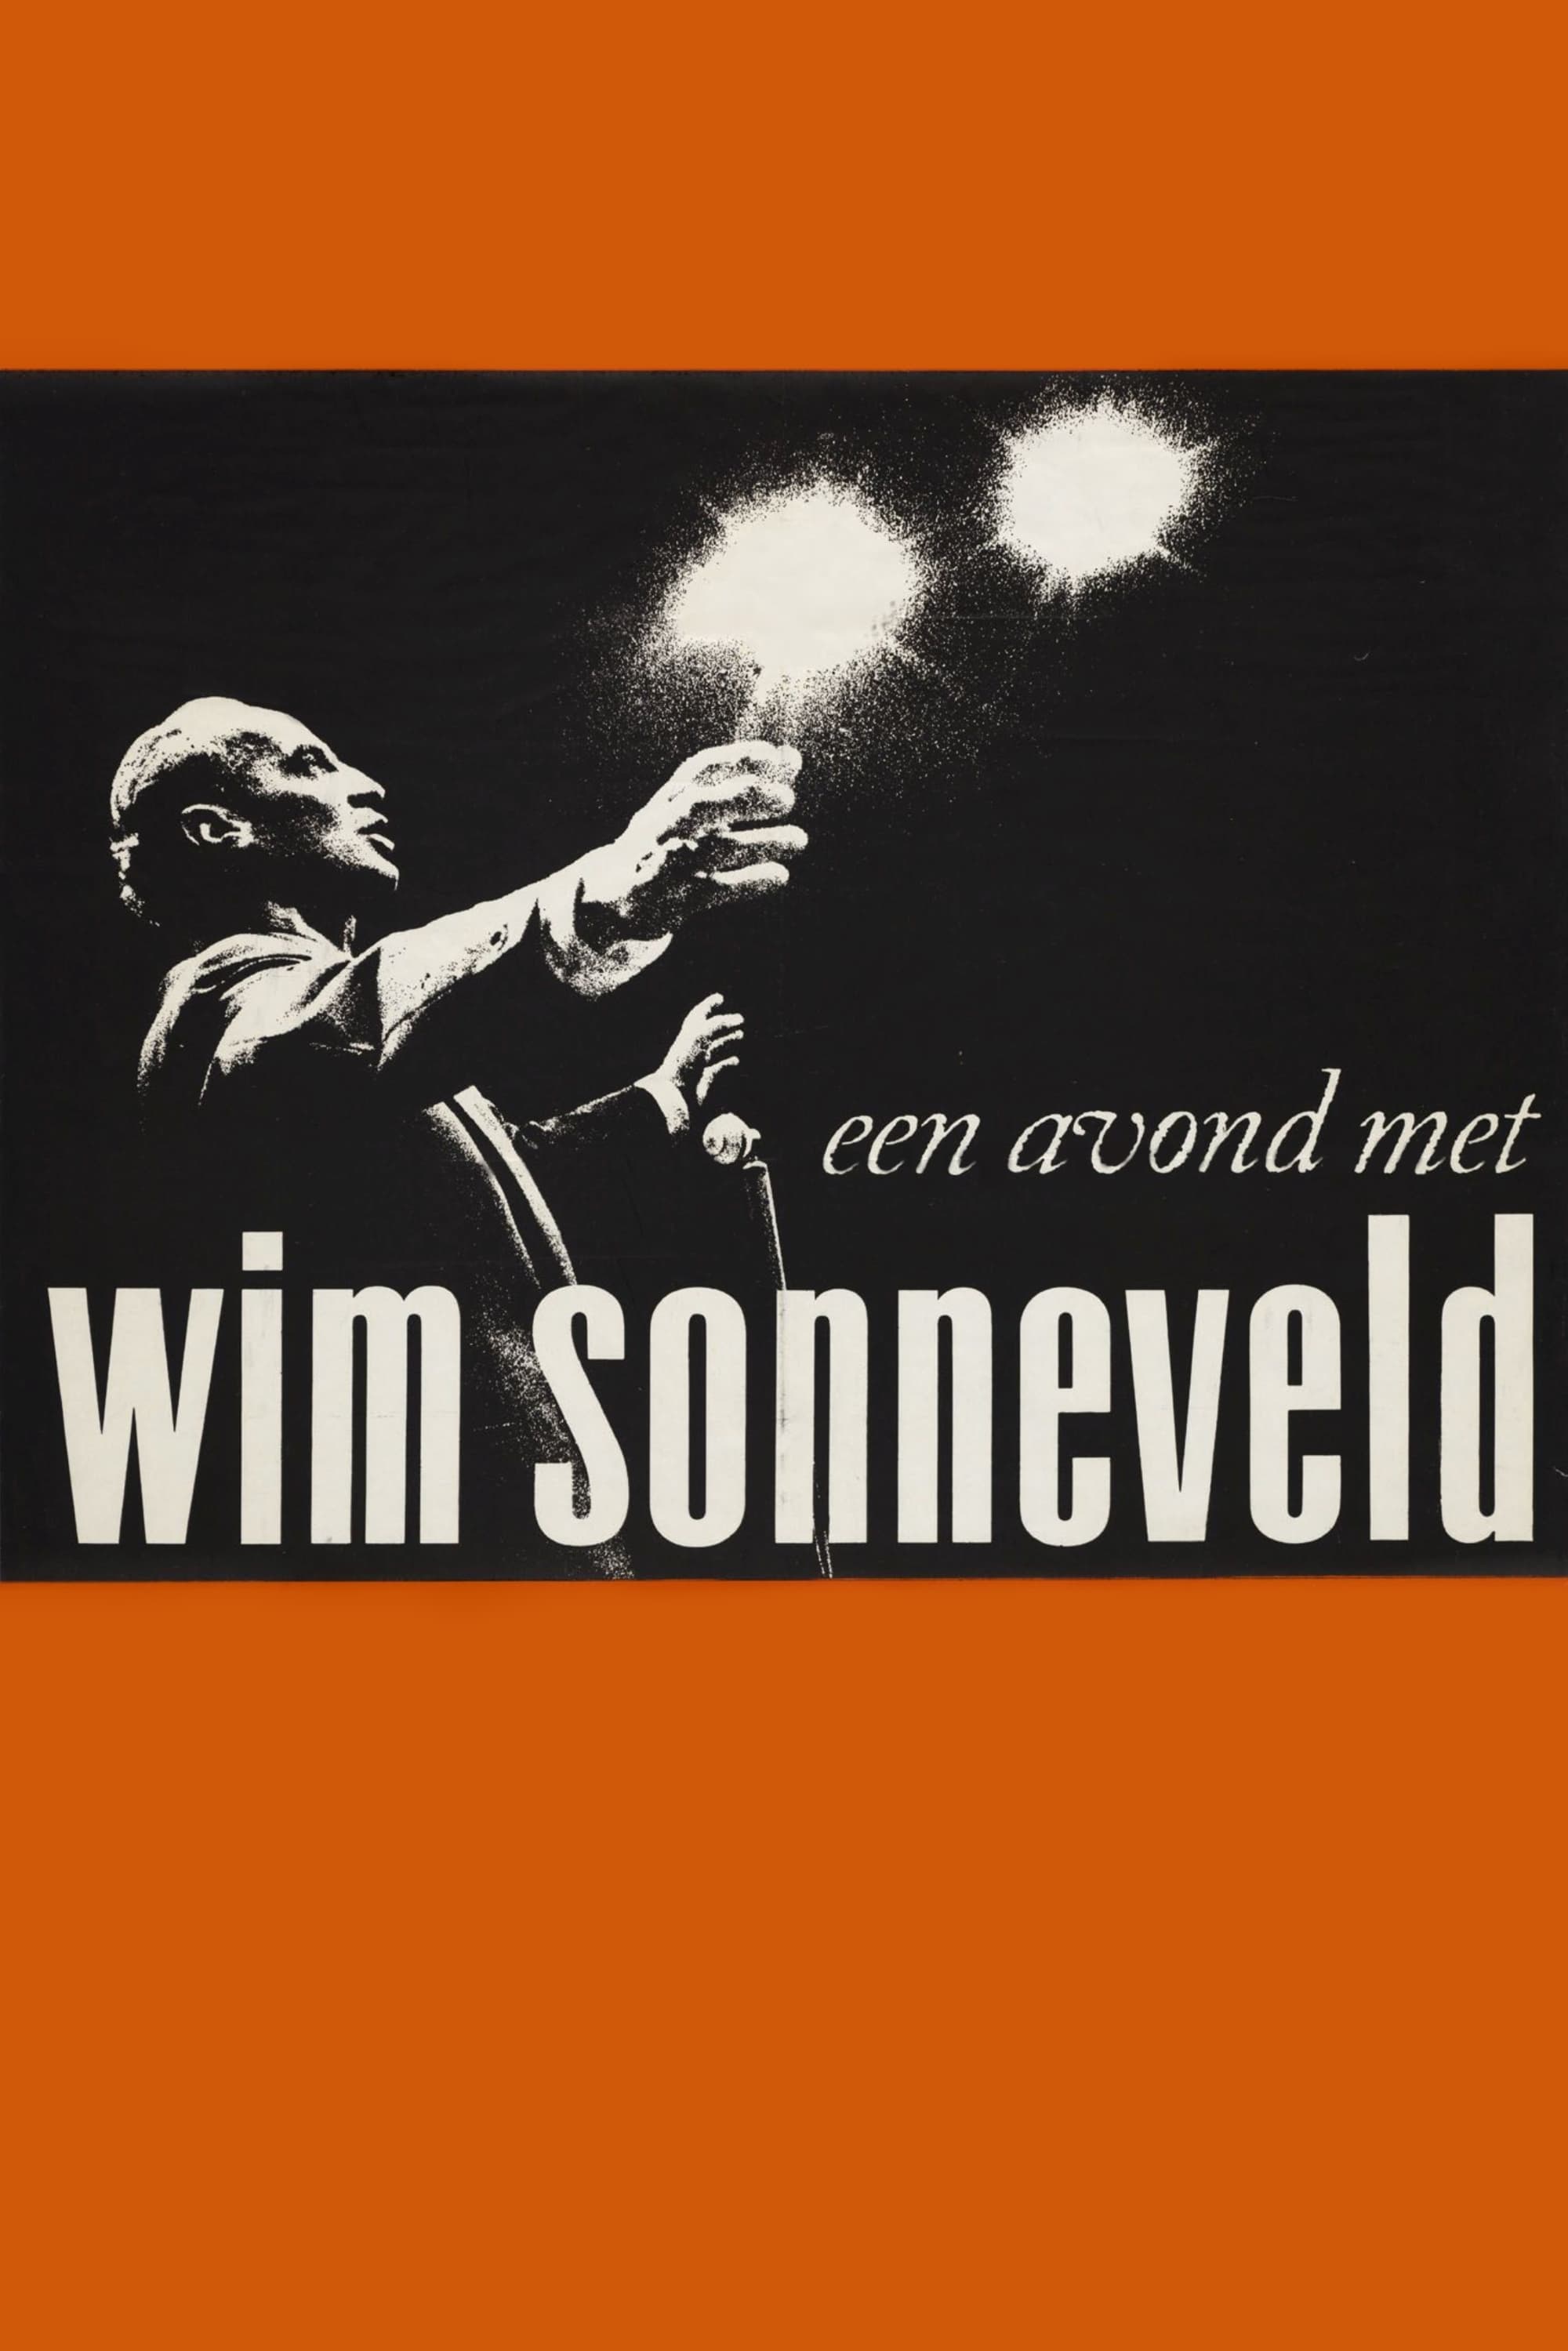 An Evening with Wim Sonneveld